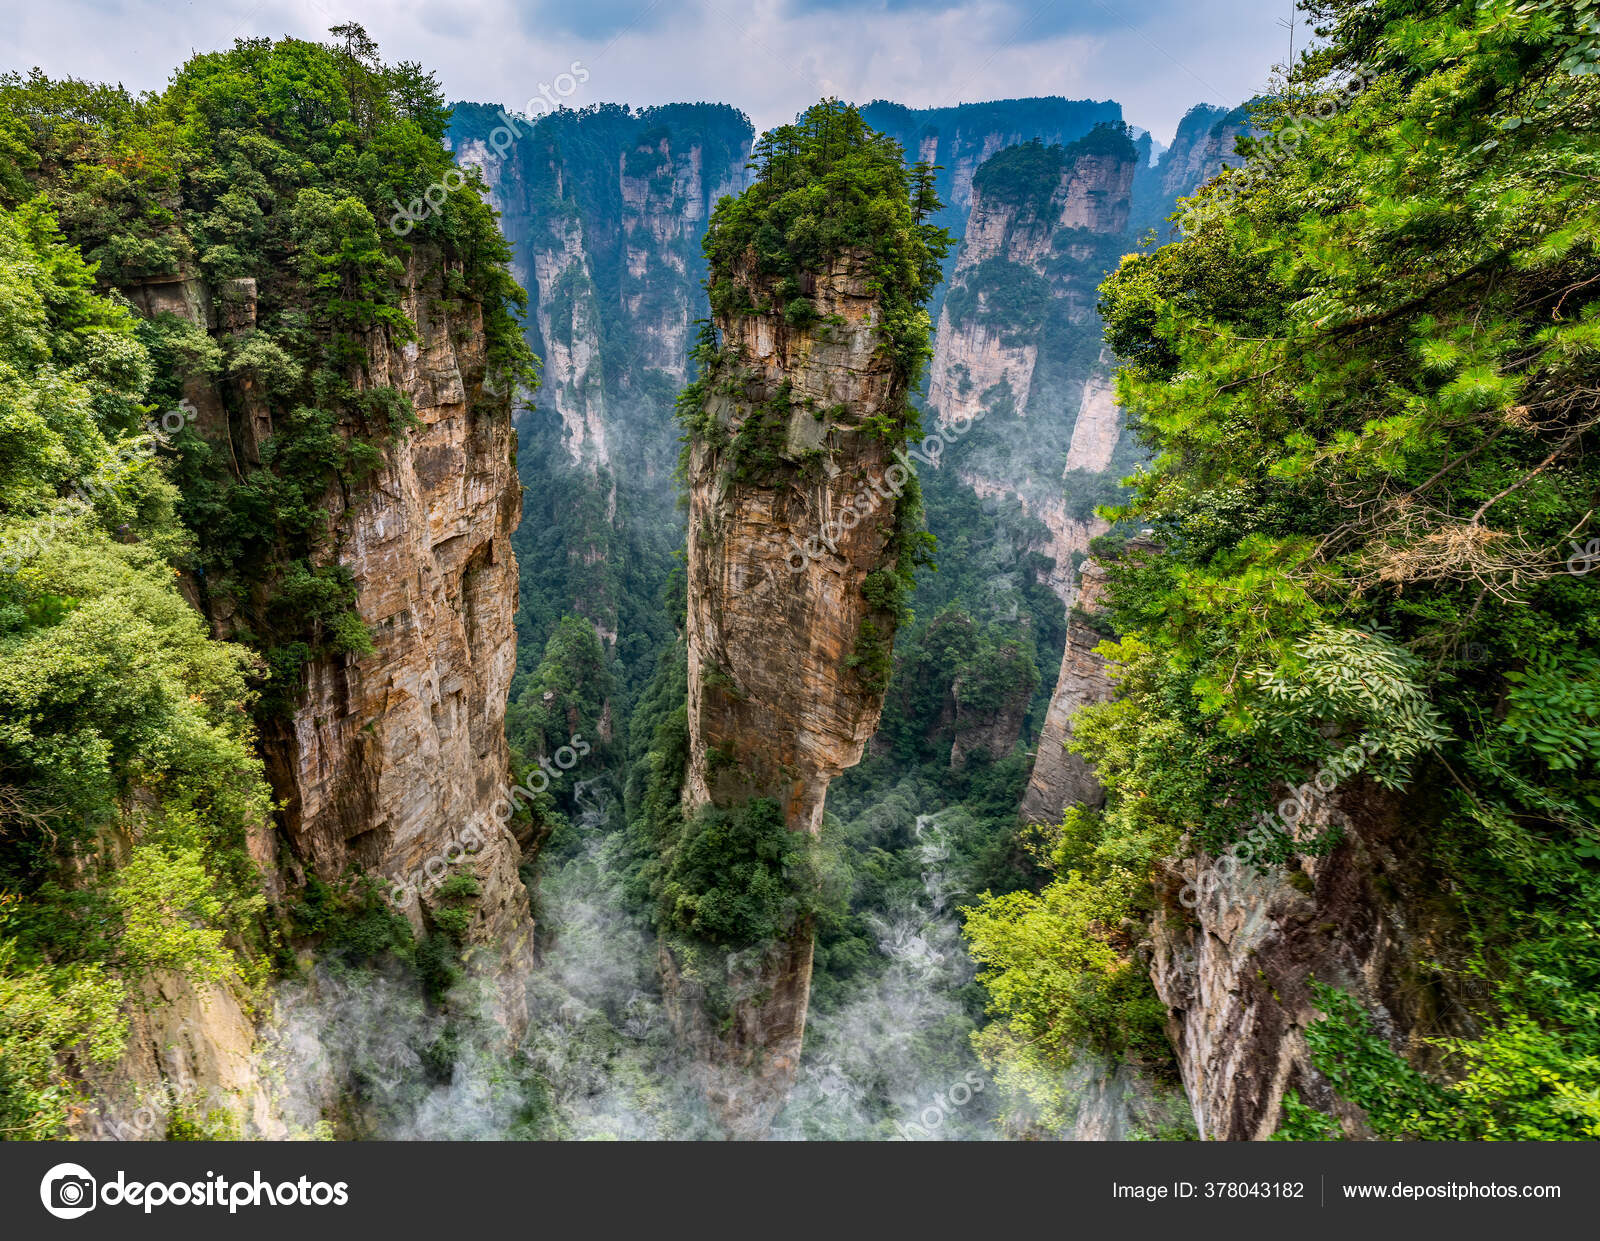 The Avatar mountains in Zhangjiajie China  Photo